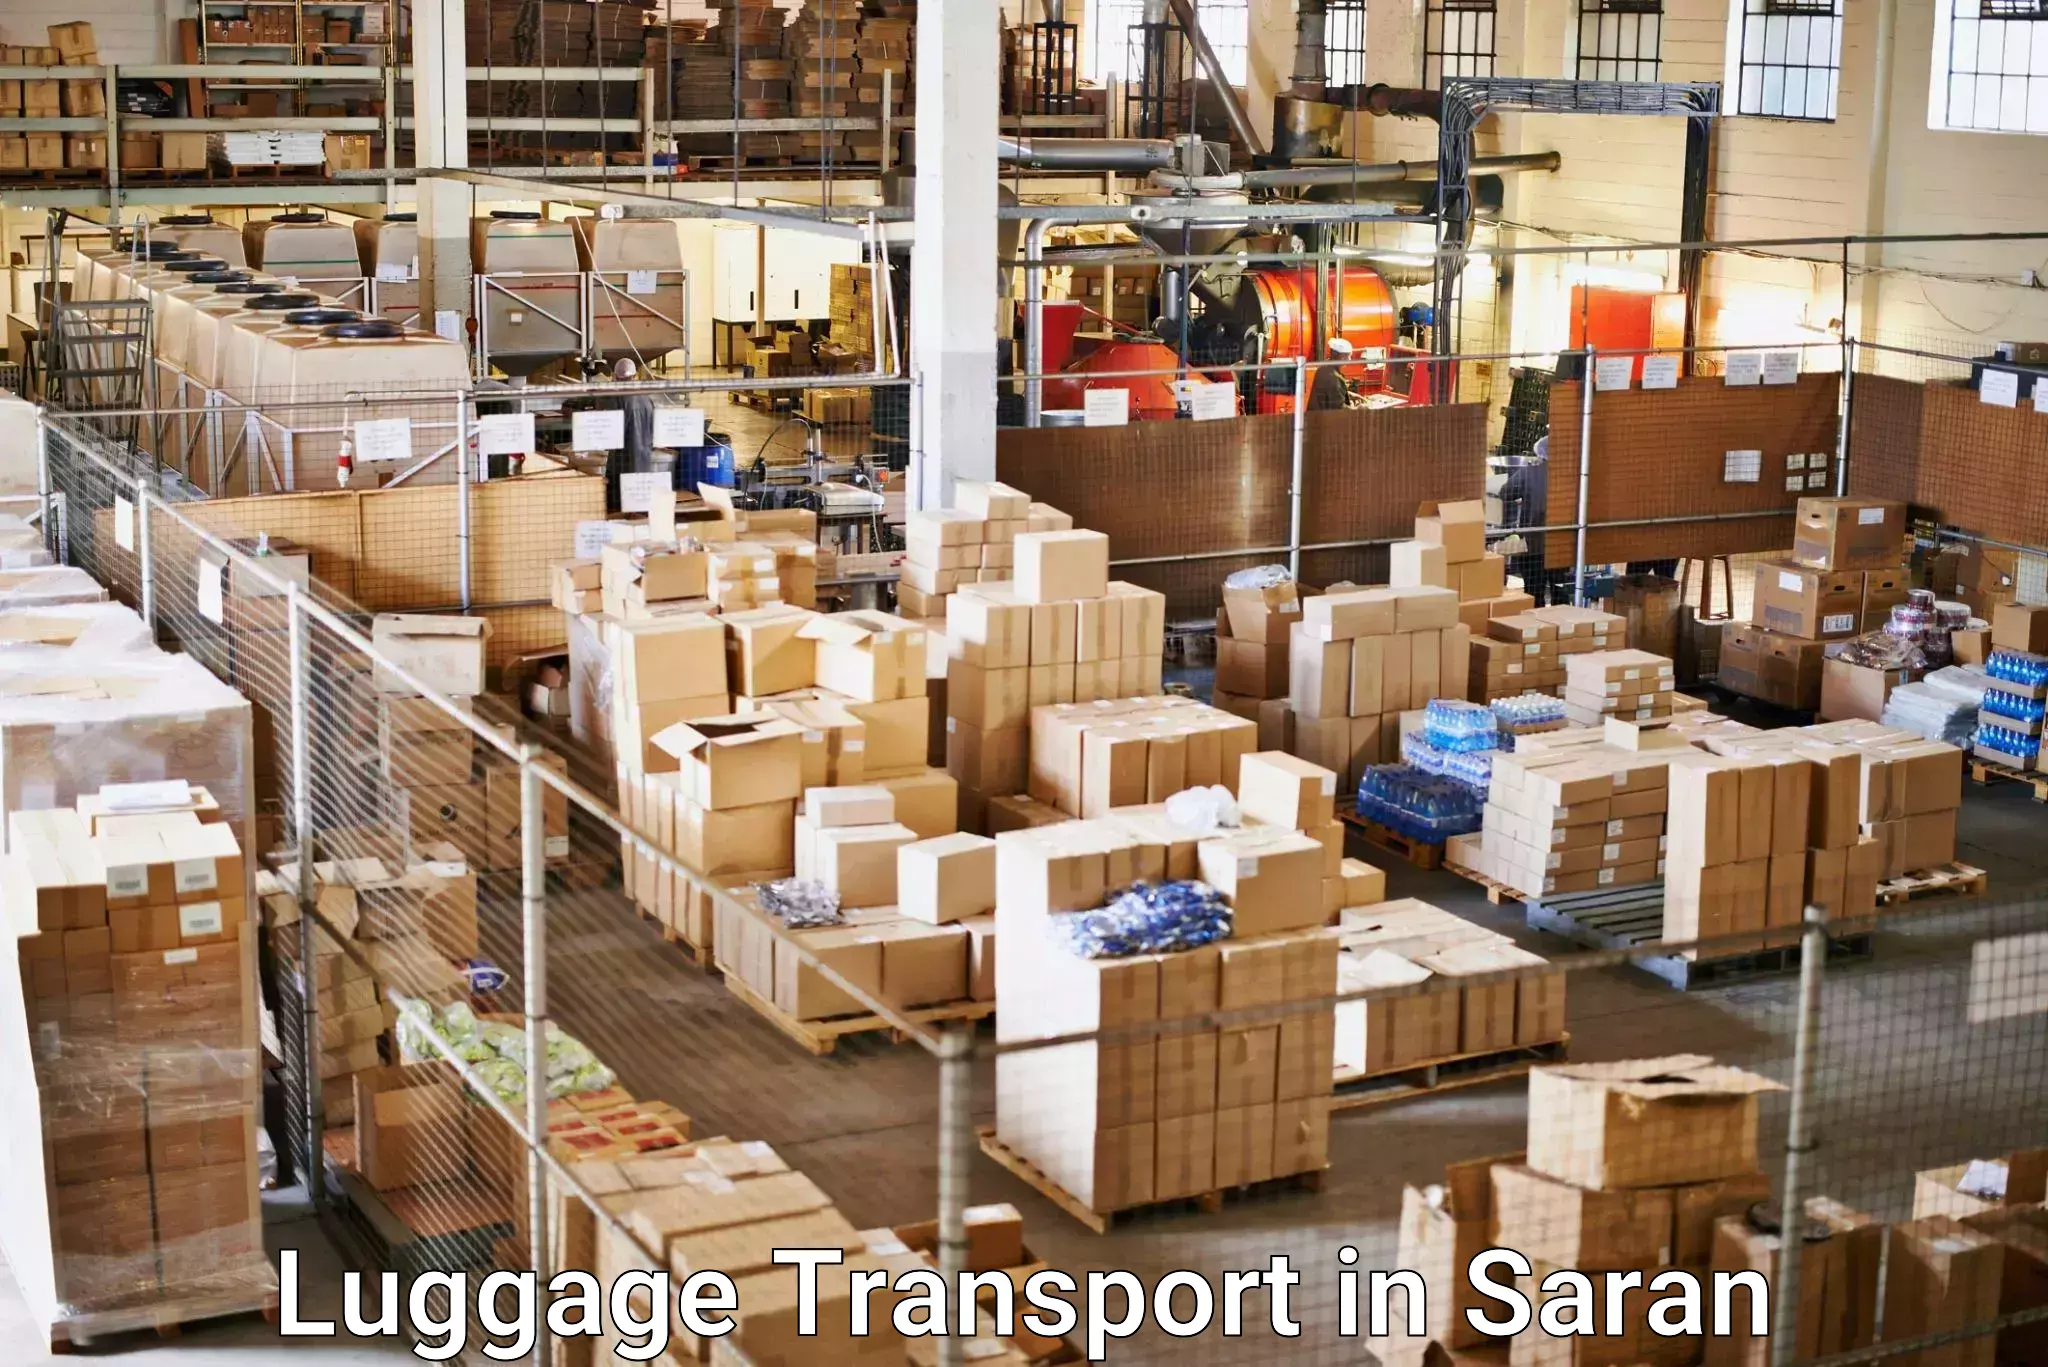 Luggage transport rates in Saran